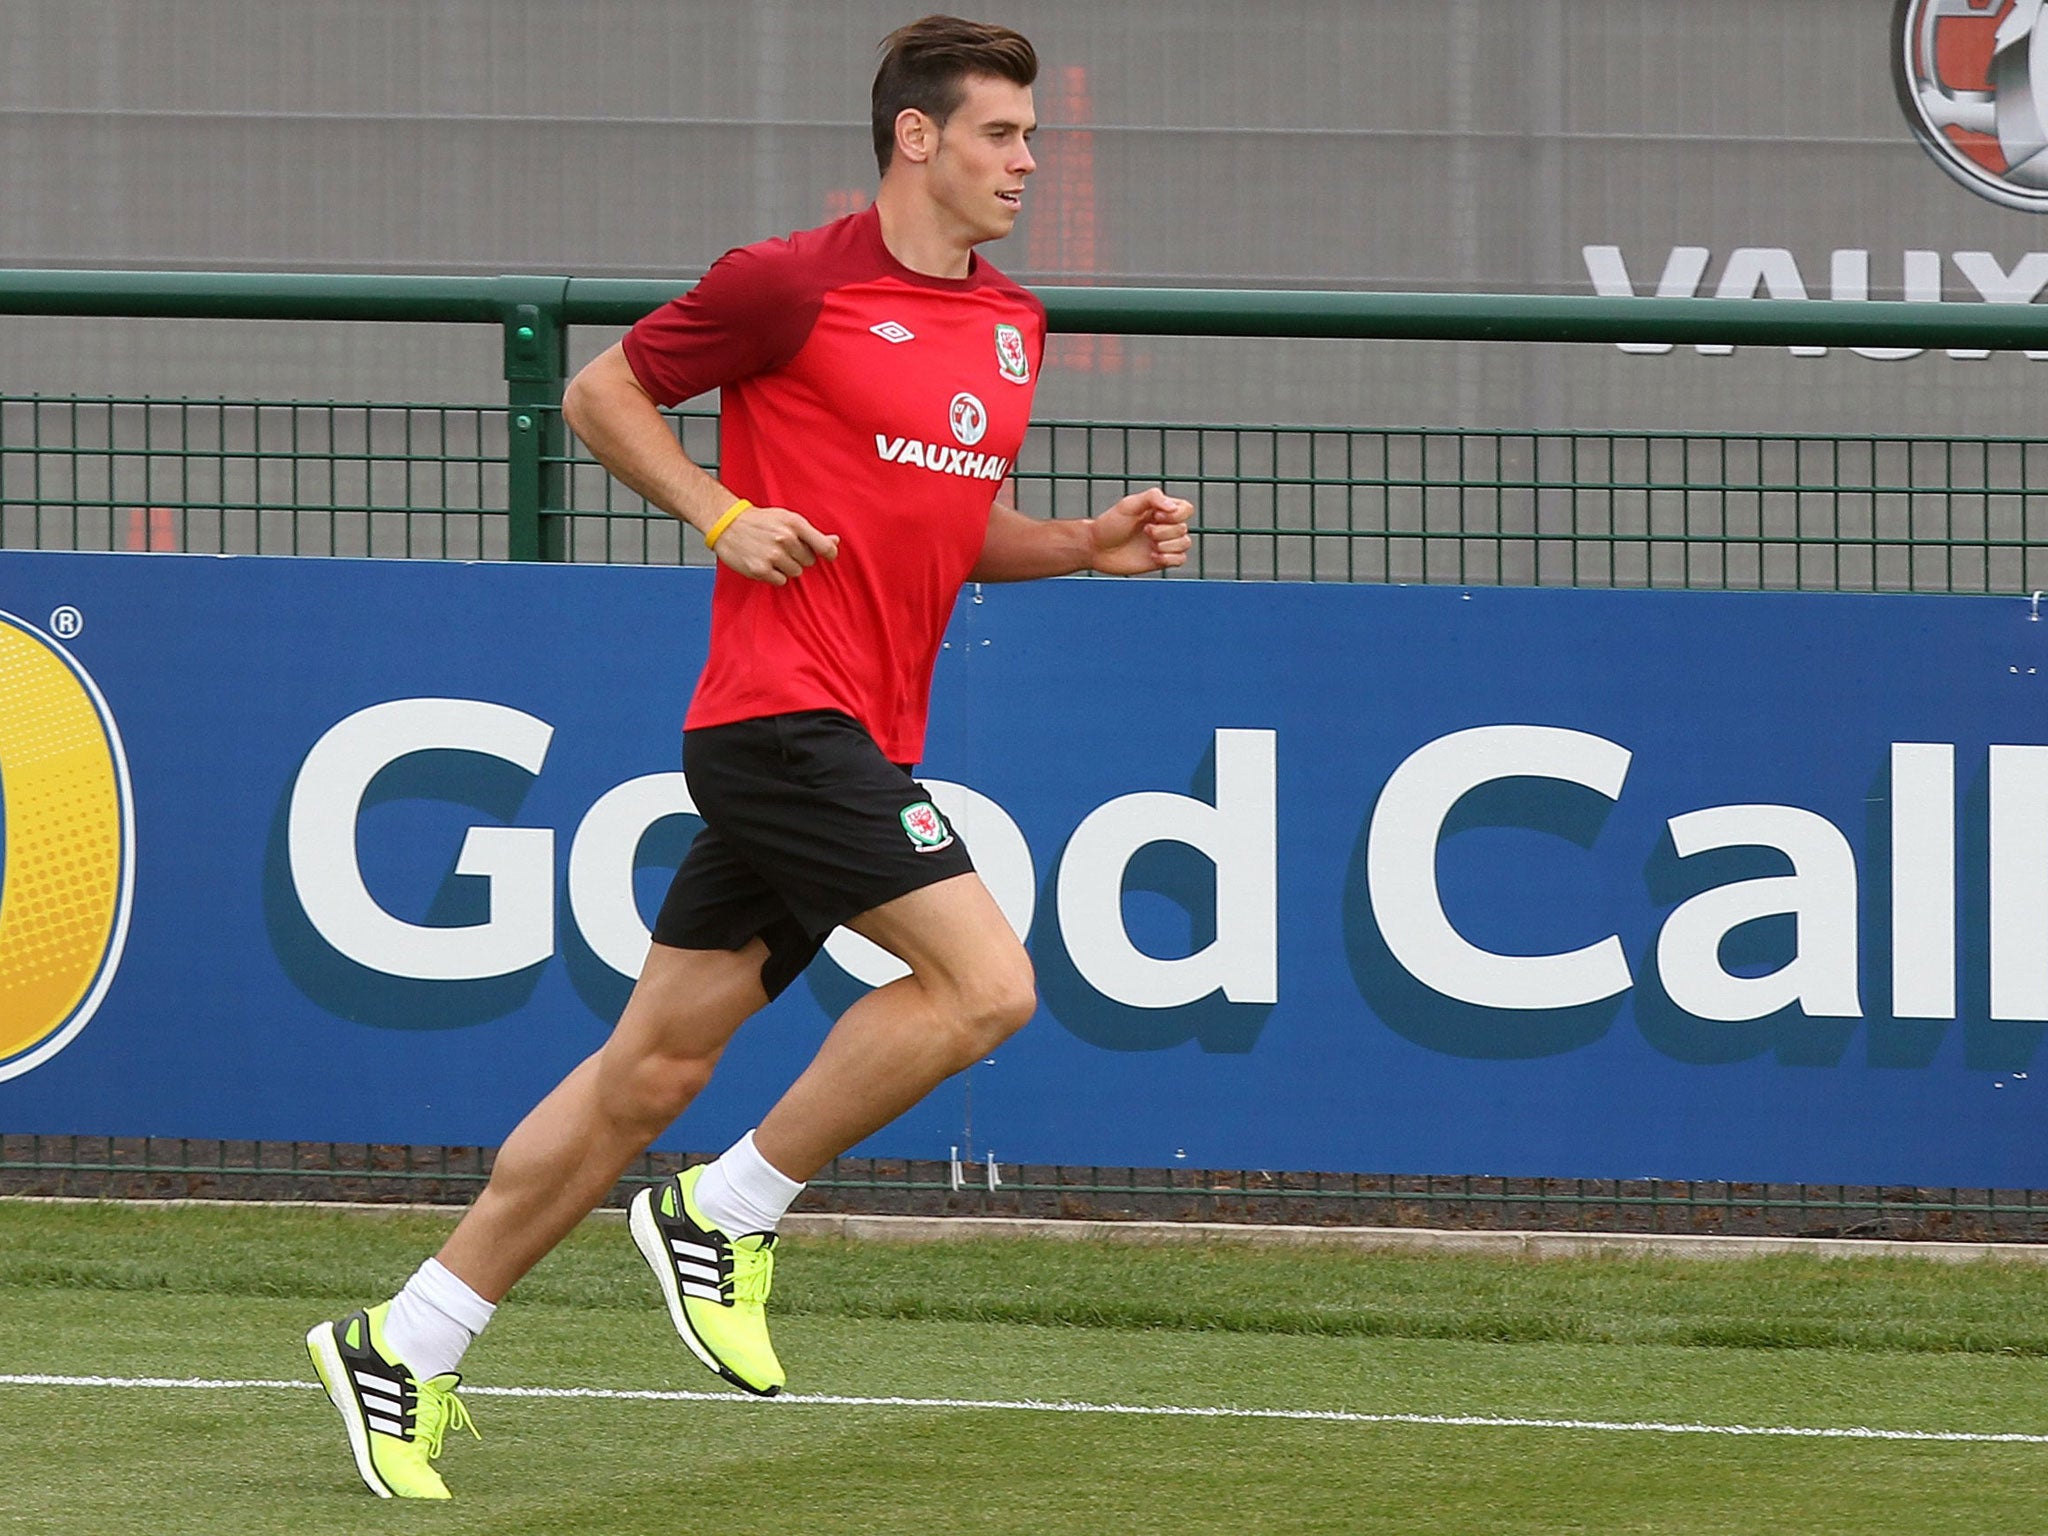 Wales midfielder Gareth Bale will not play against Ireland